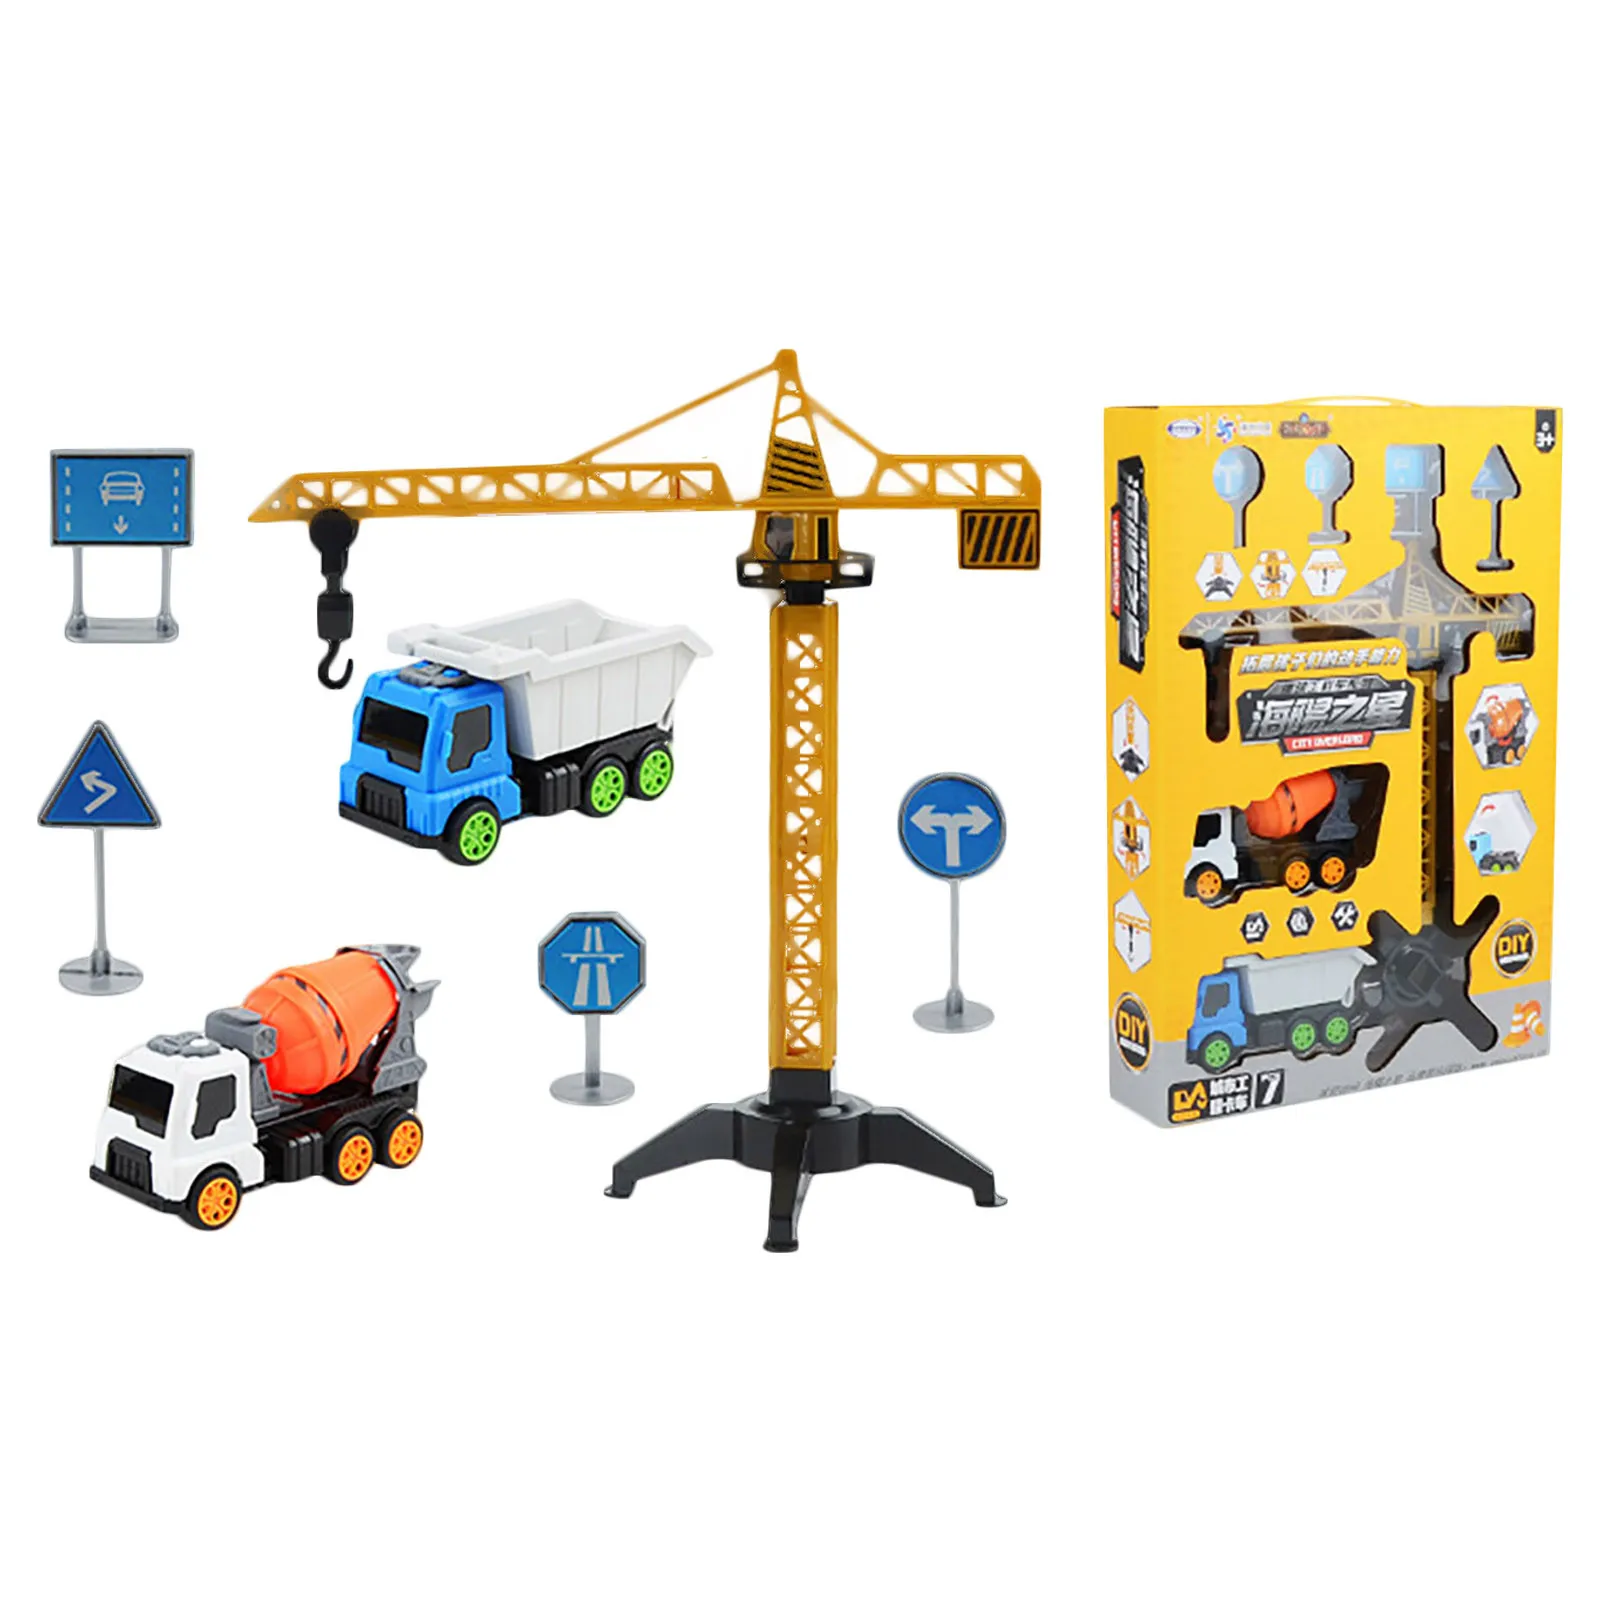 

Construction Site Vehicles Toy Set, Kids Engineering Playset, Tractor, Digger, Crane, Dump Trucks, Excavator,Cement, Steamroller